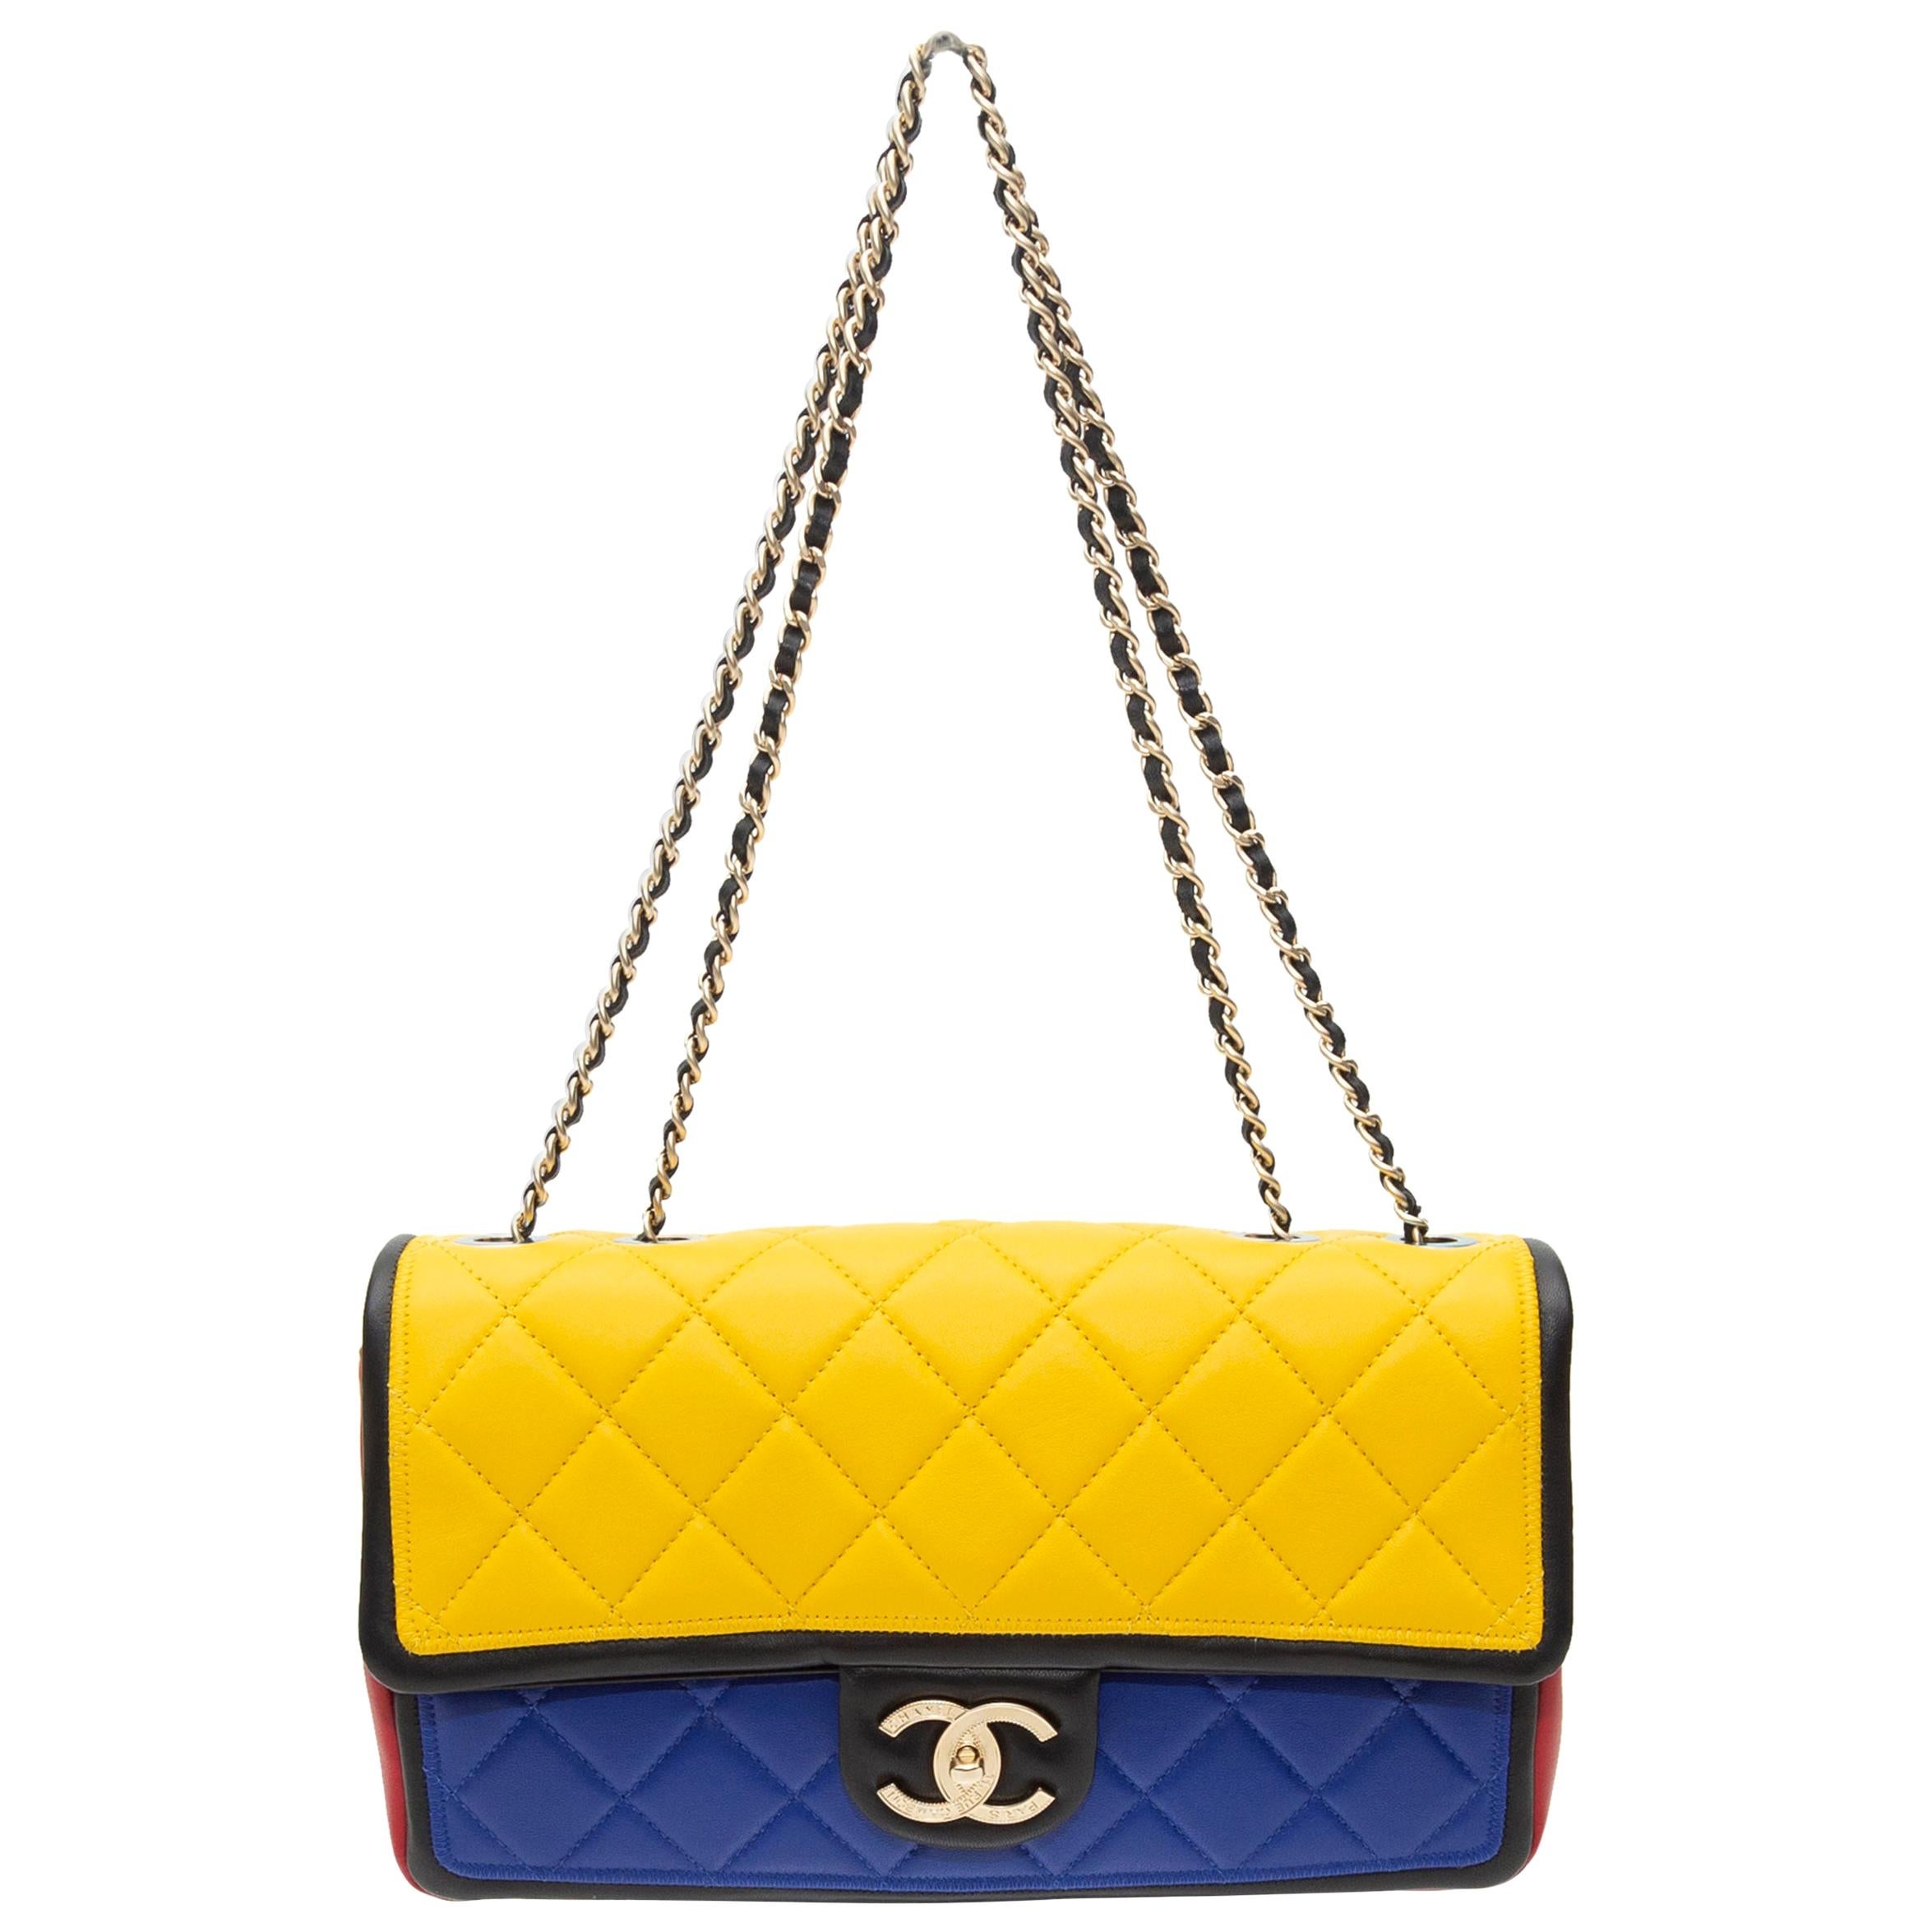 Chanel Jumbo Colorblock Flap Bag